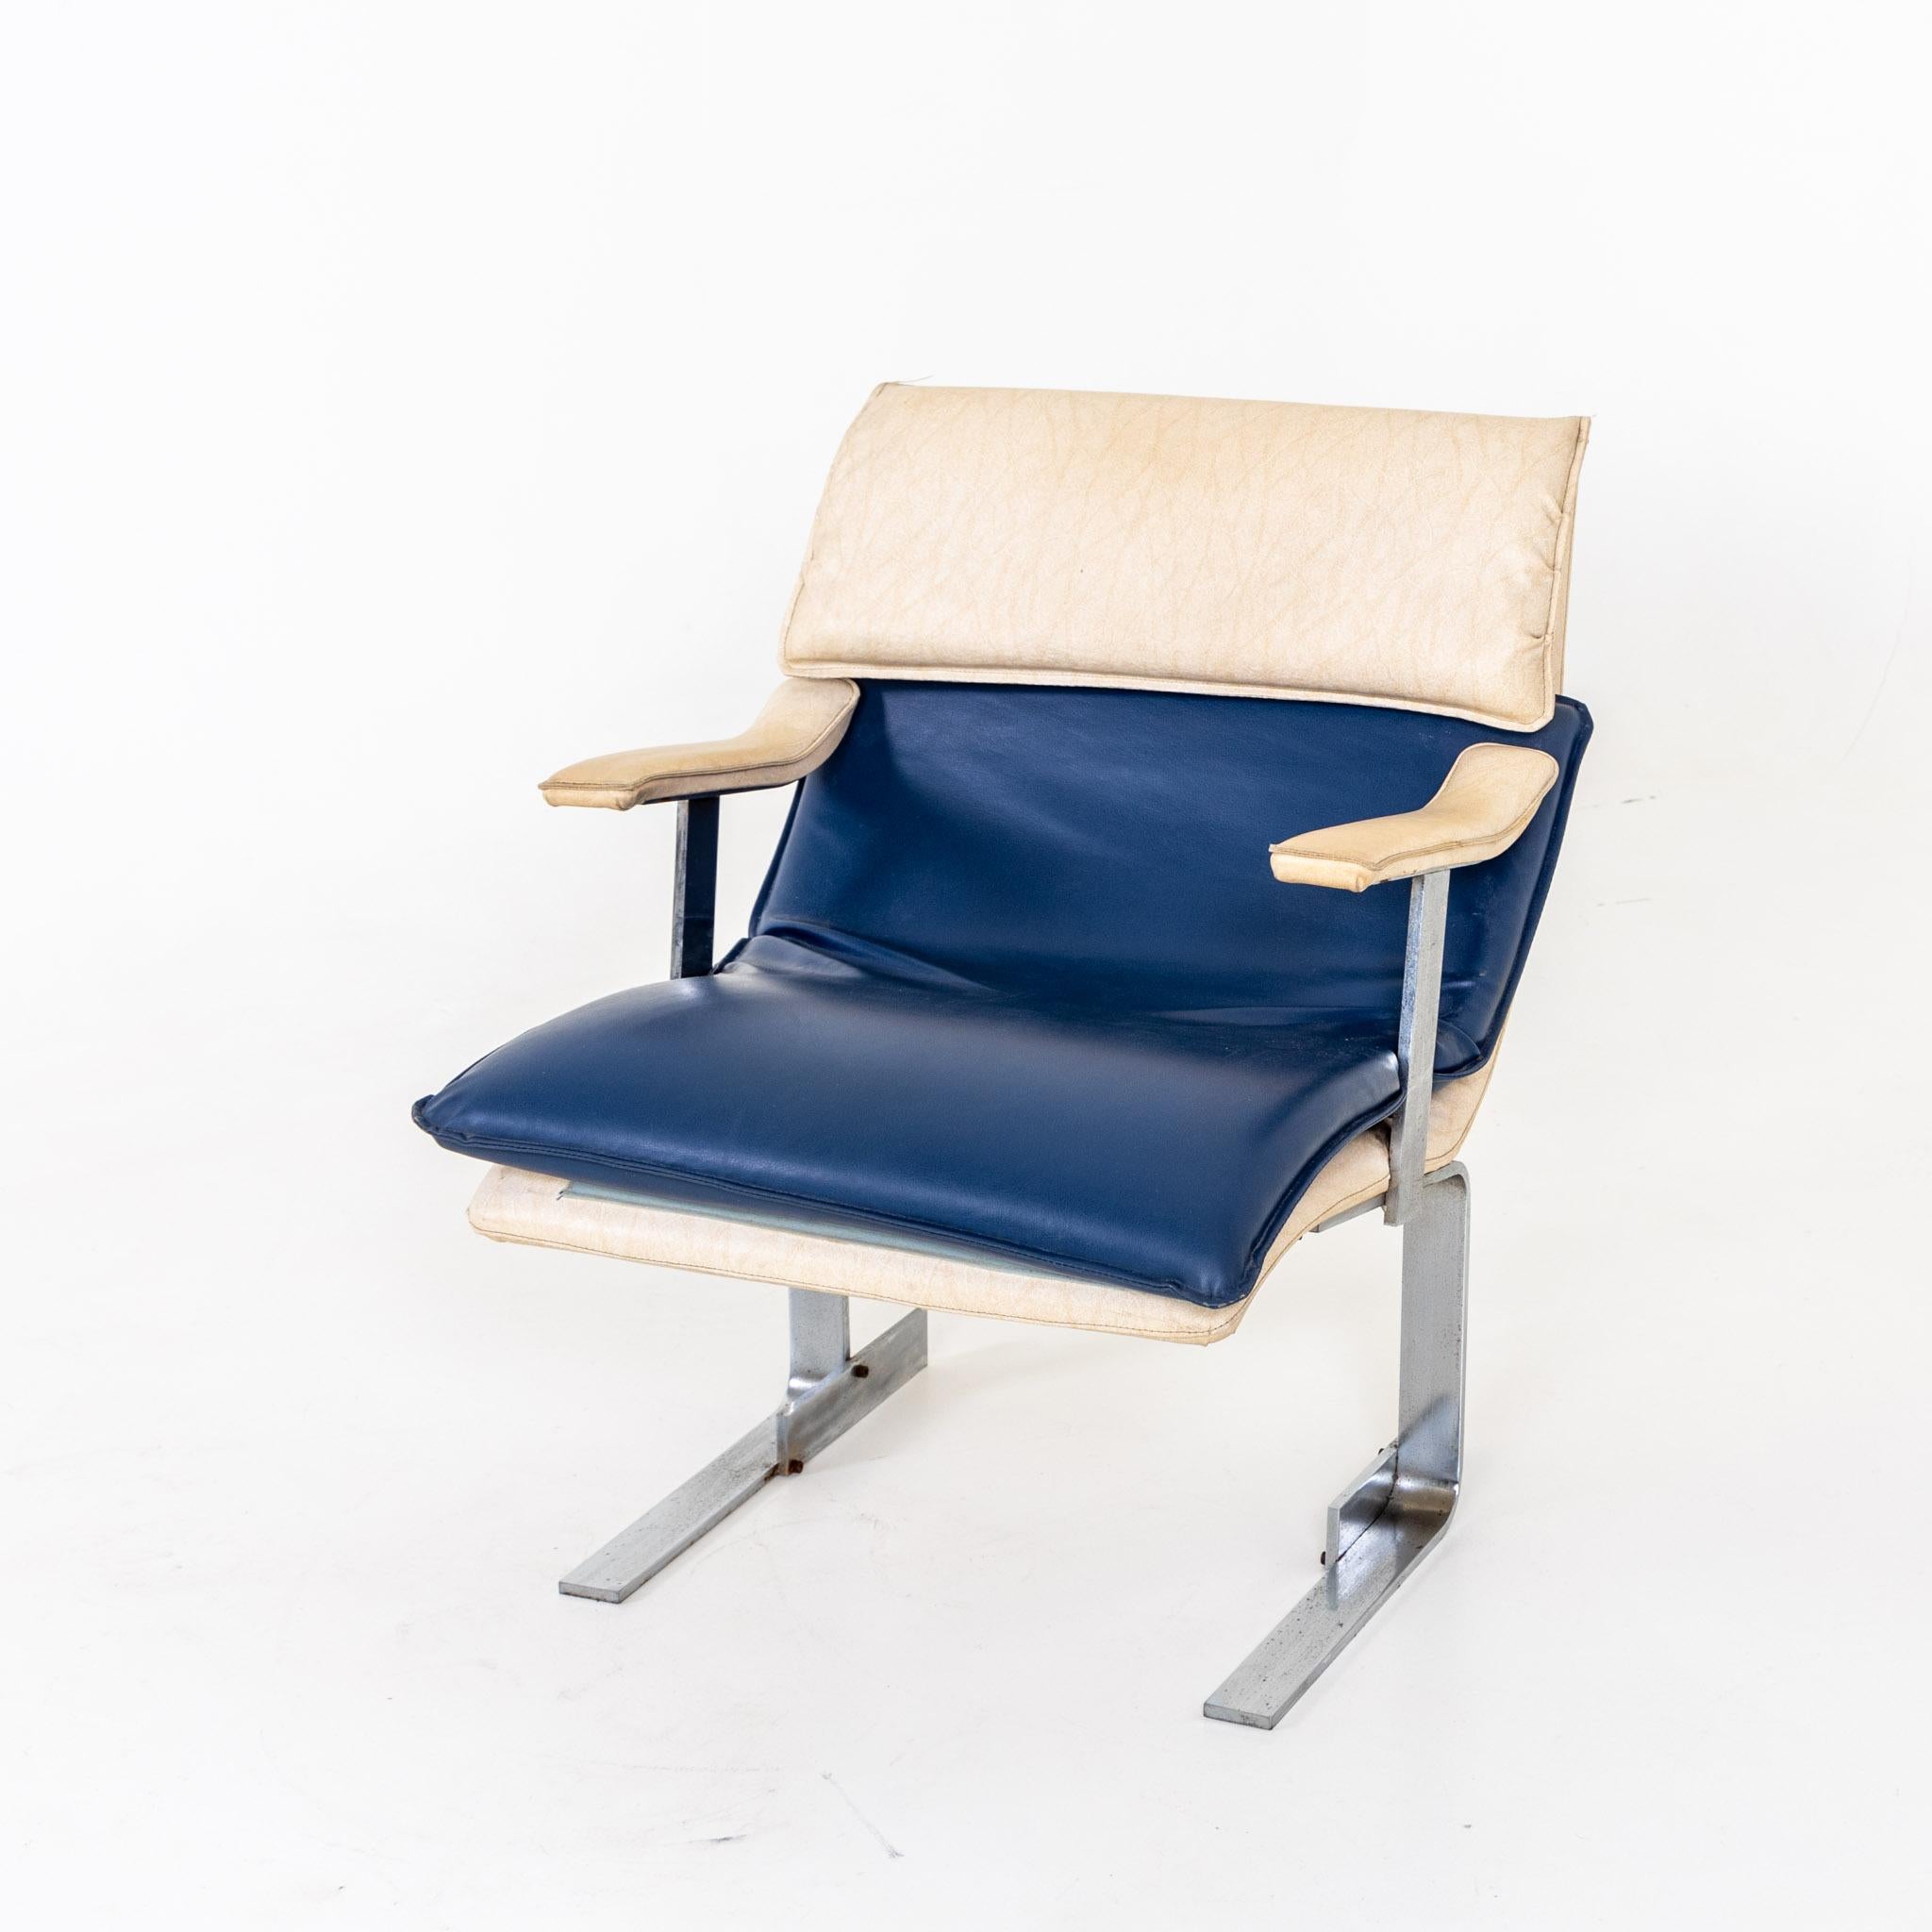 Metal Giovanni Offredi for Saporiti 'Onda Wave' Lounge Chairs, 1970s For Sale